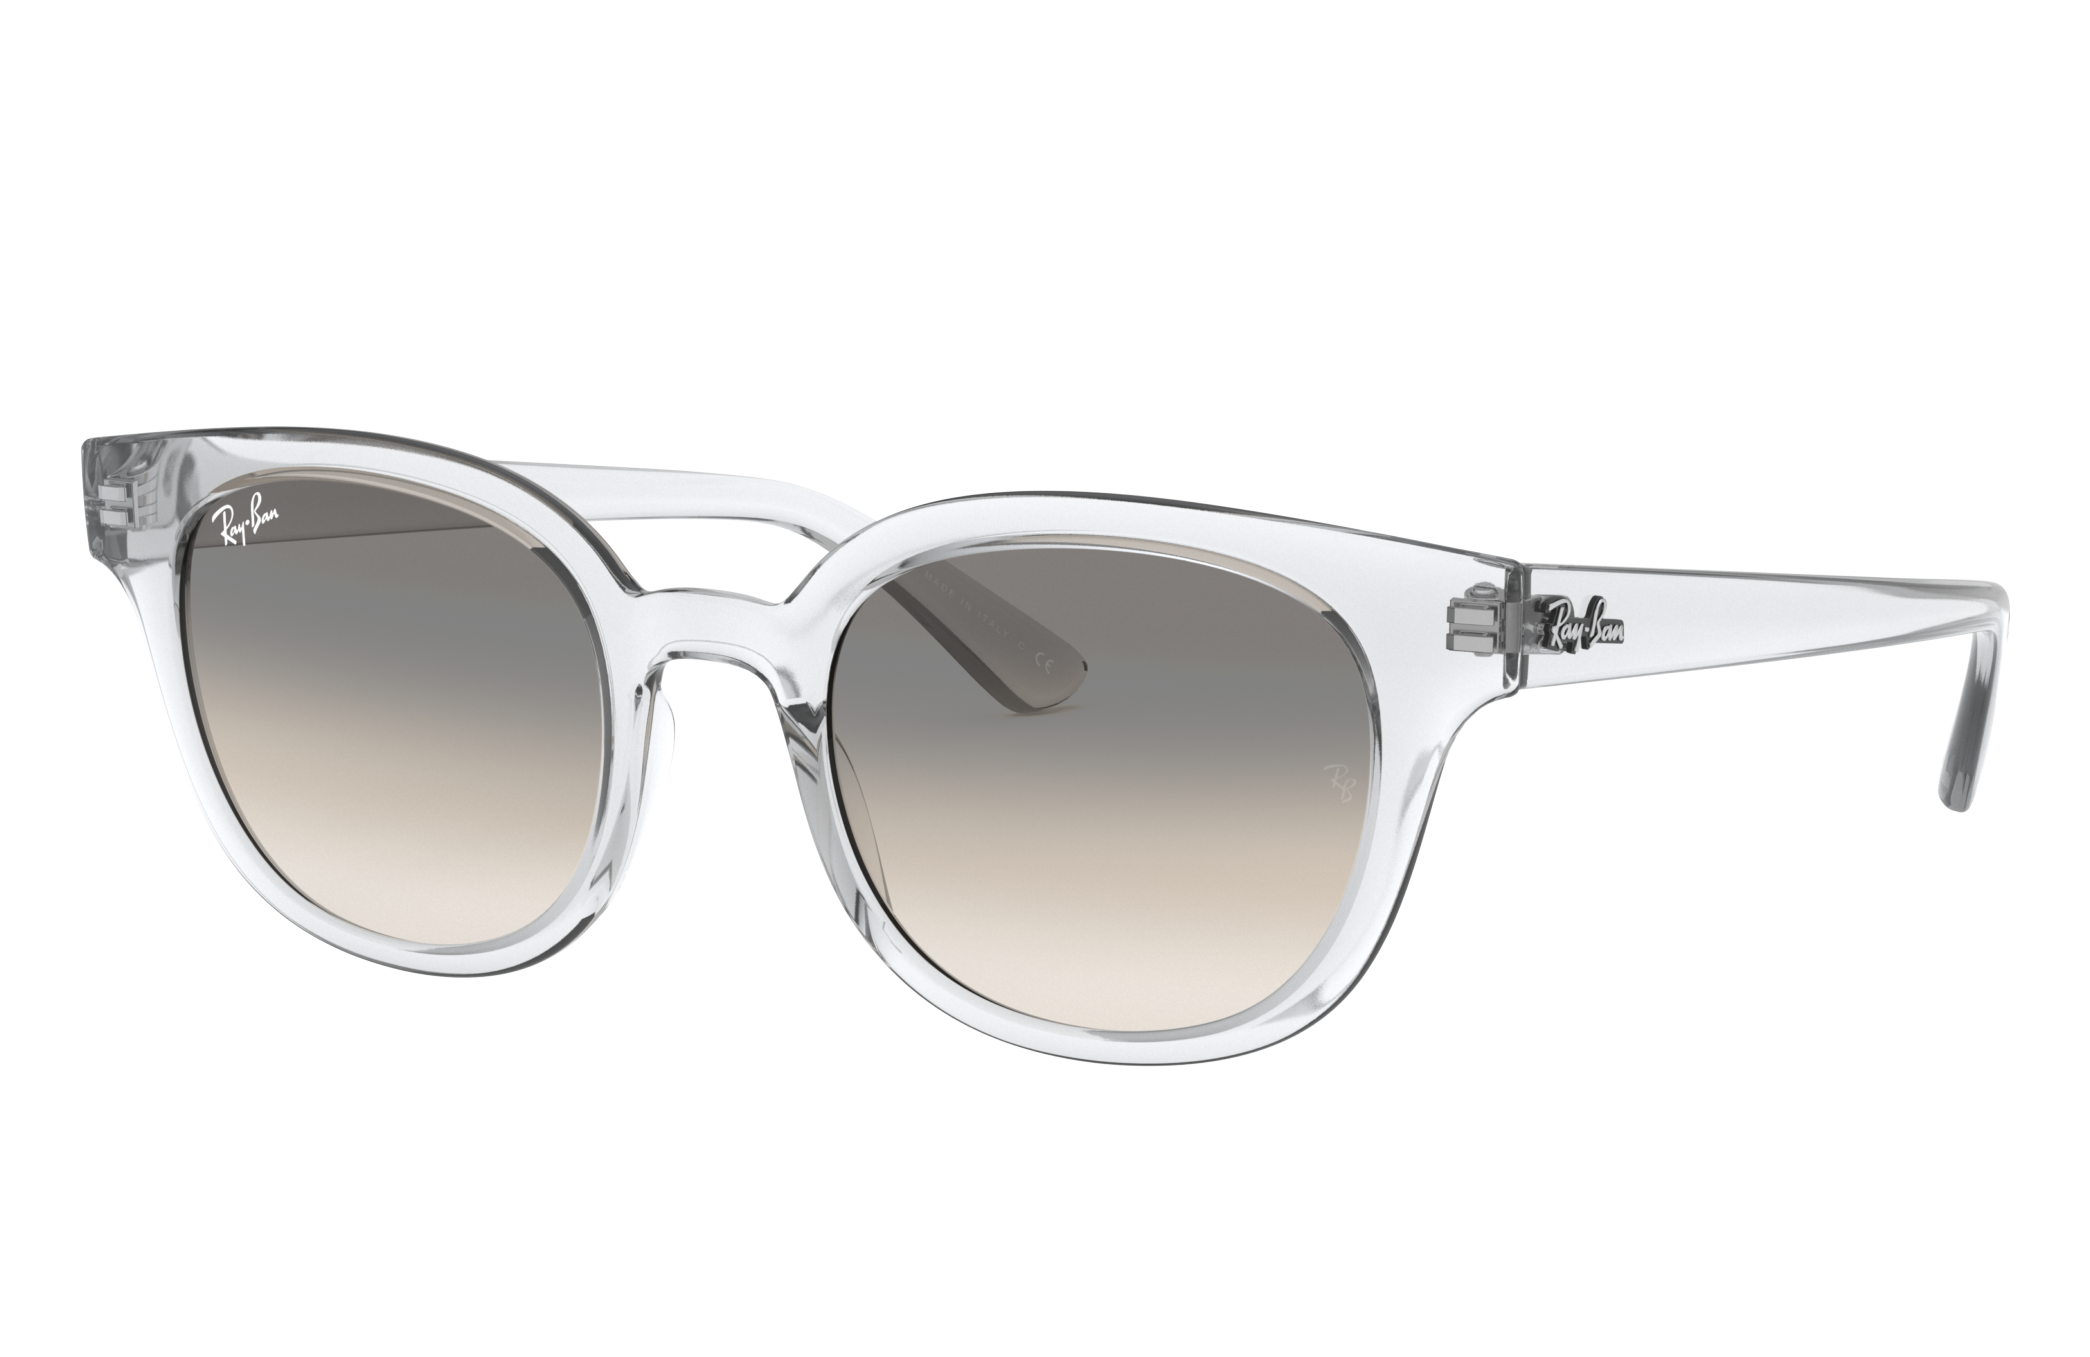 ray ban sunglasses transparent